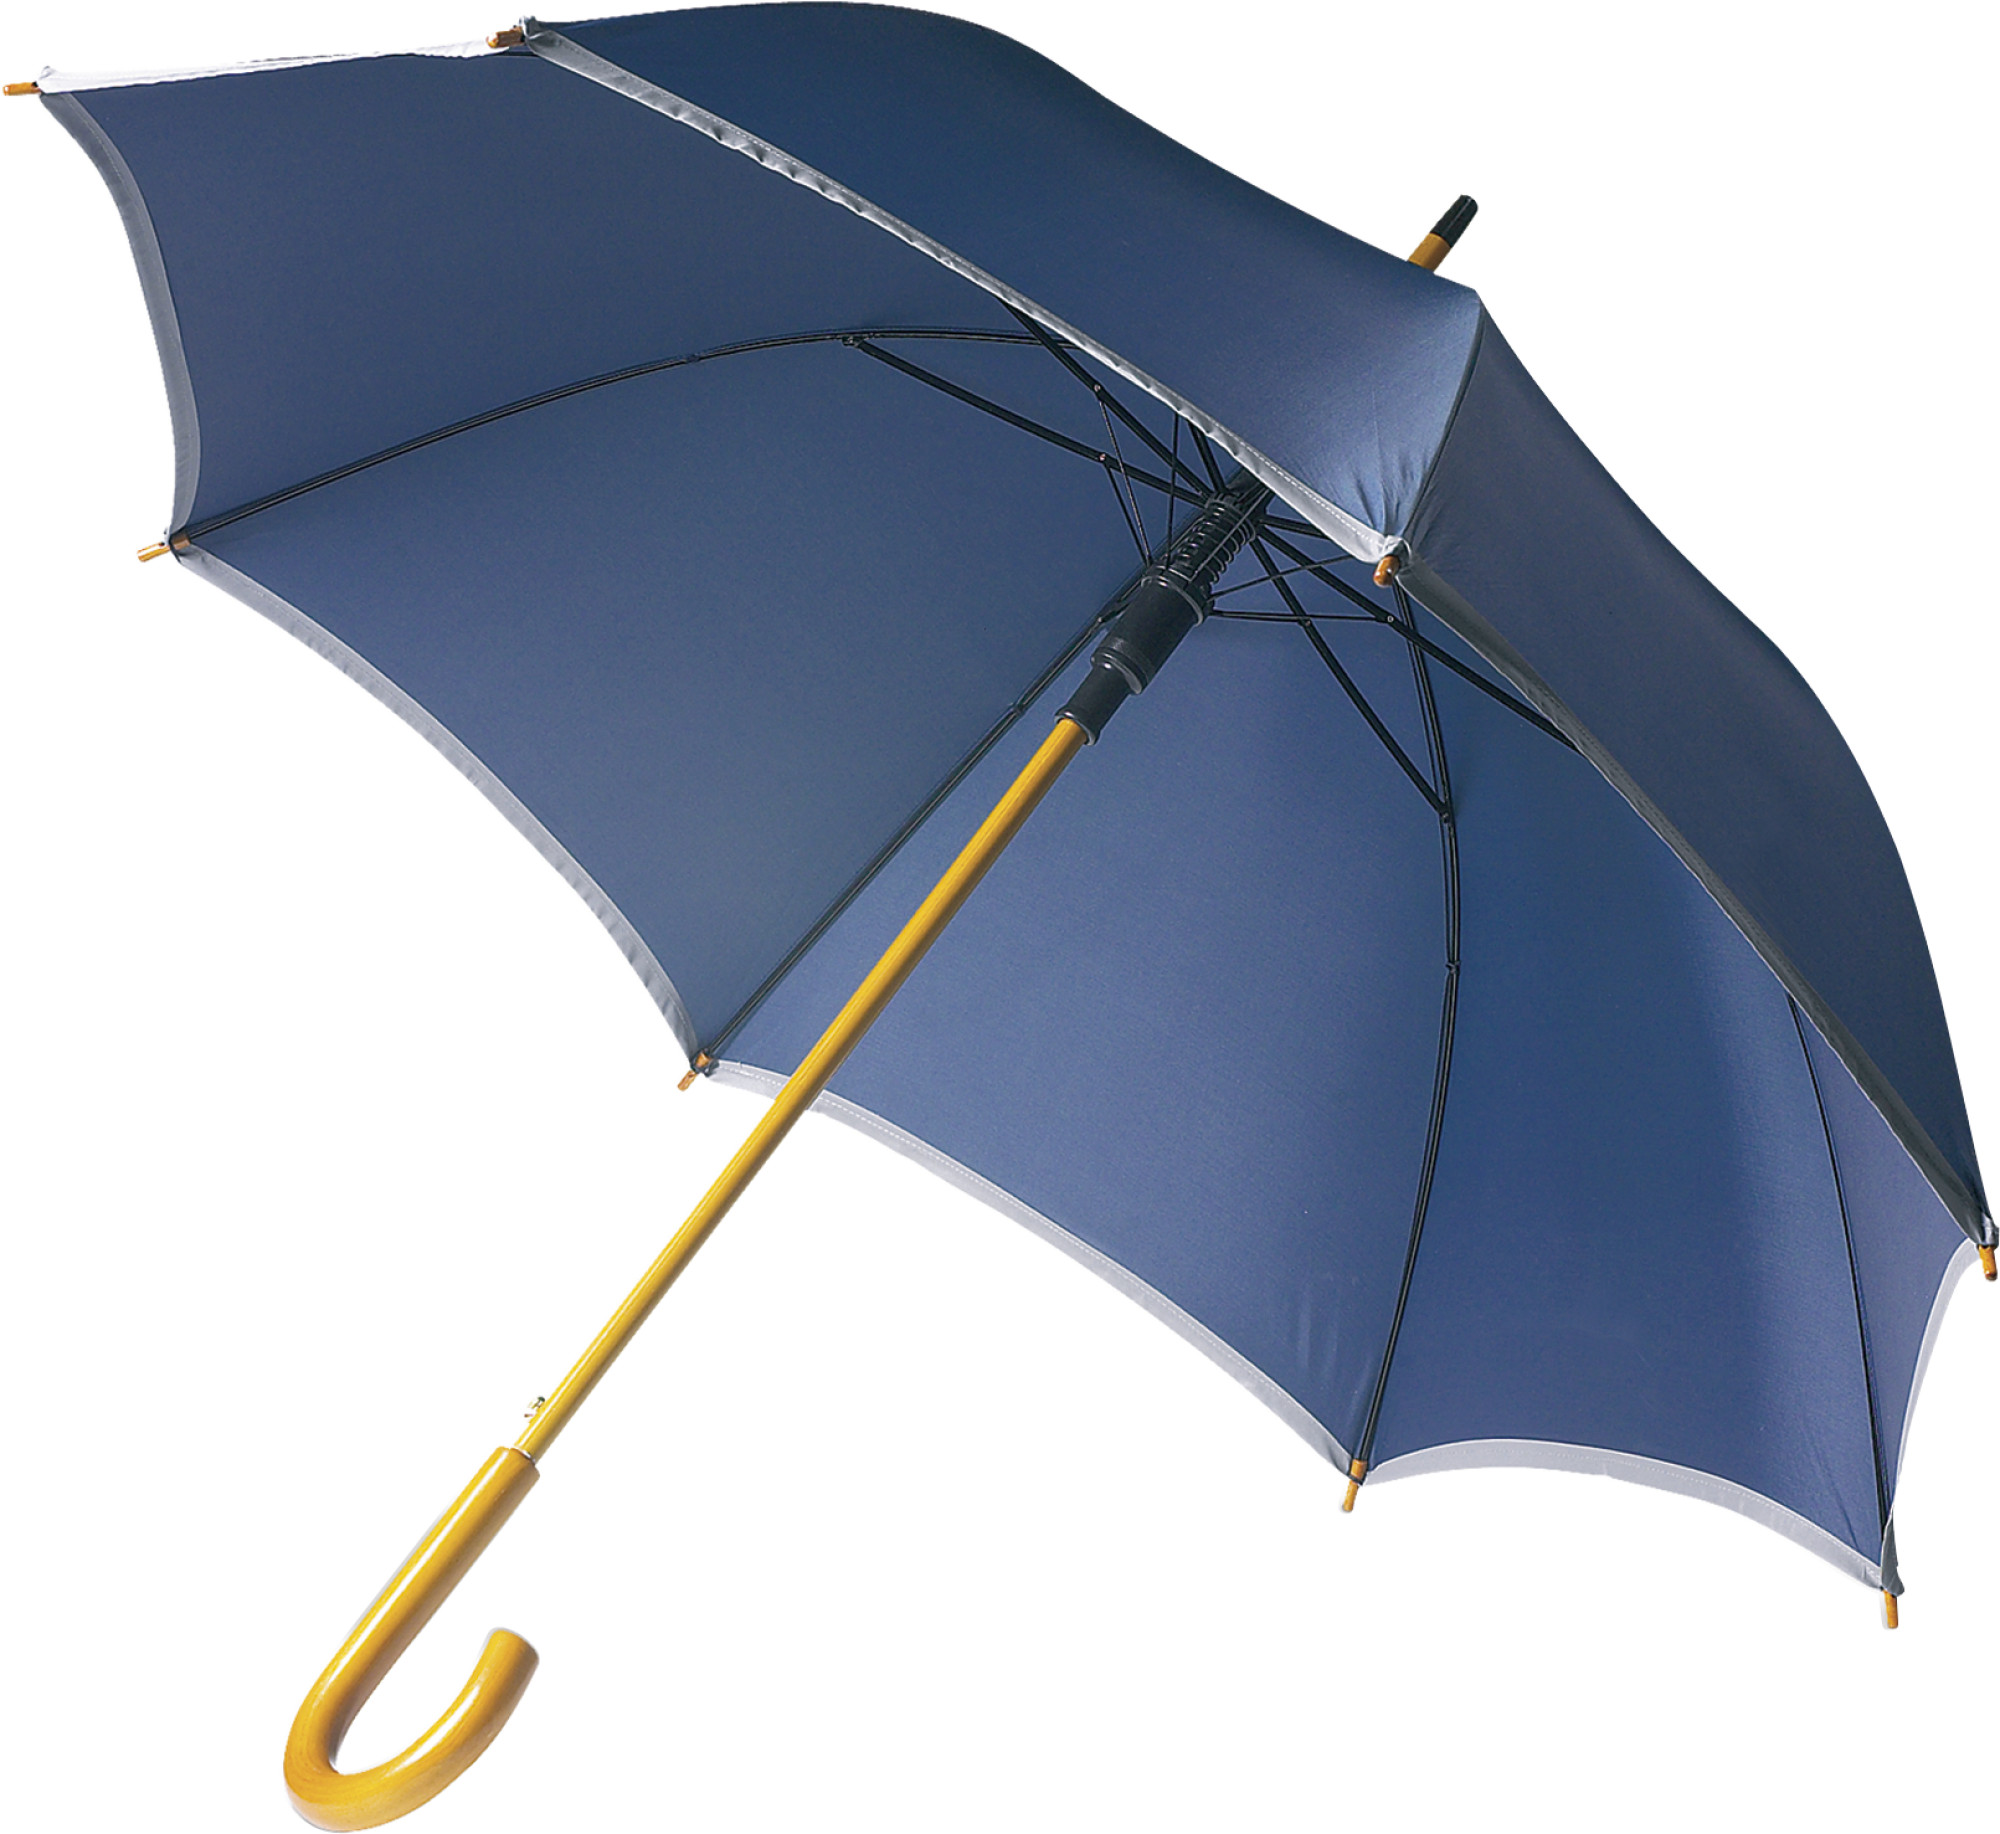 Personalised Umbrella with reflective border